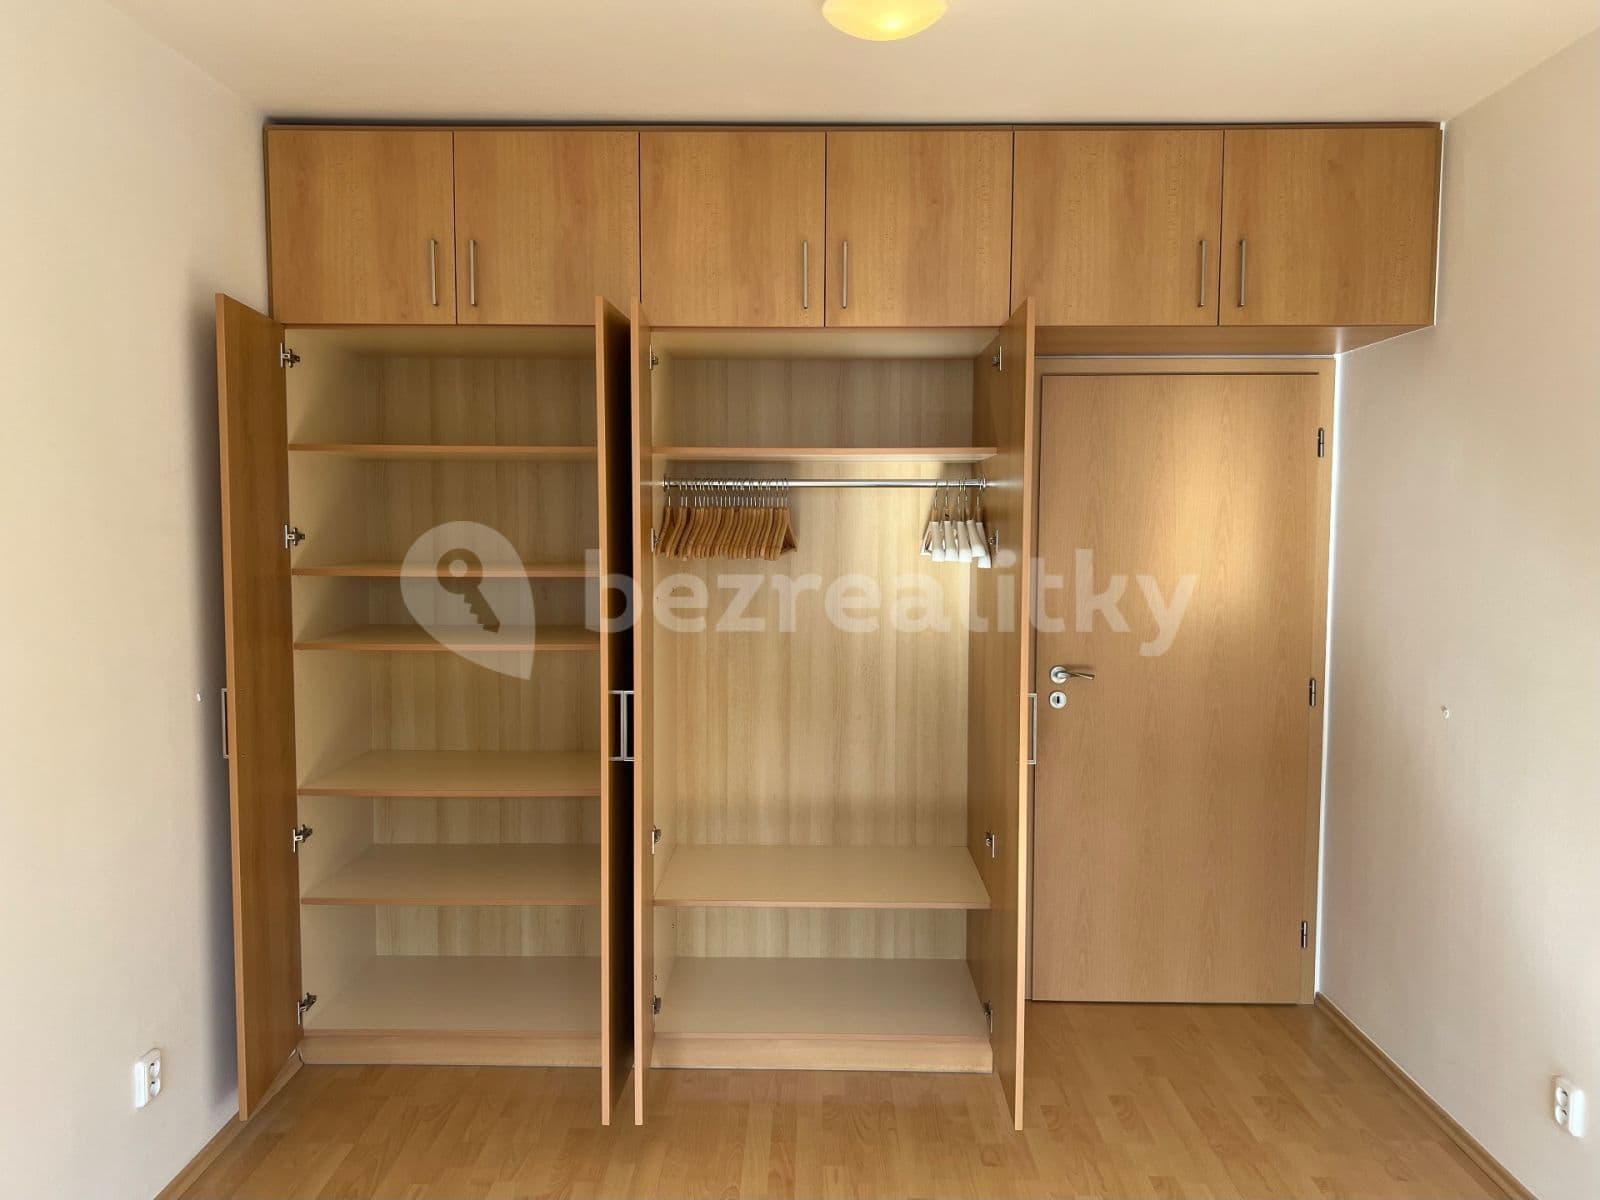 1 bedroom with open-plan kitchen flat to rent, 63 m², Purkyňova, Brno, Jihomoravský Region